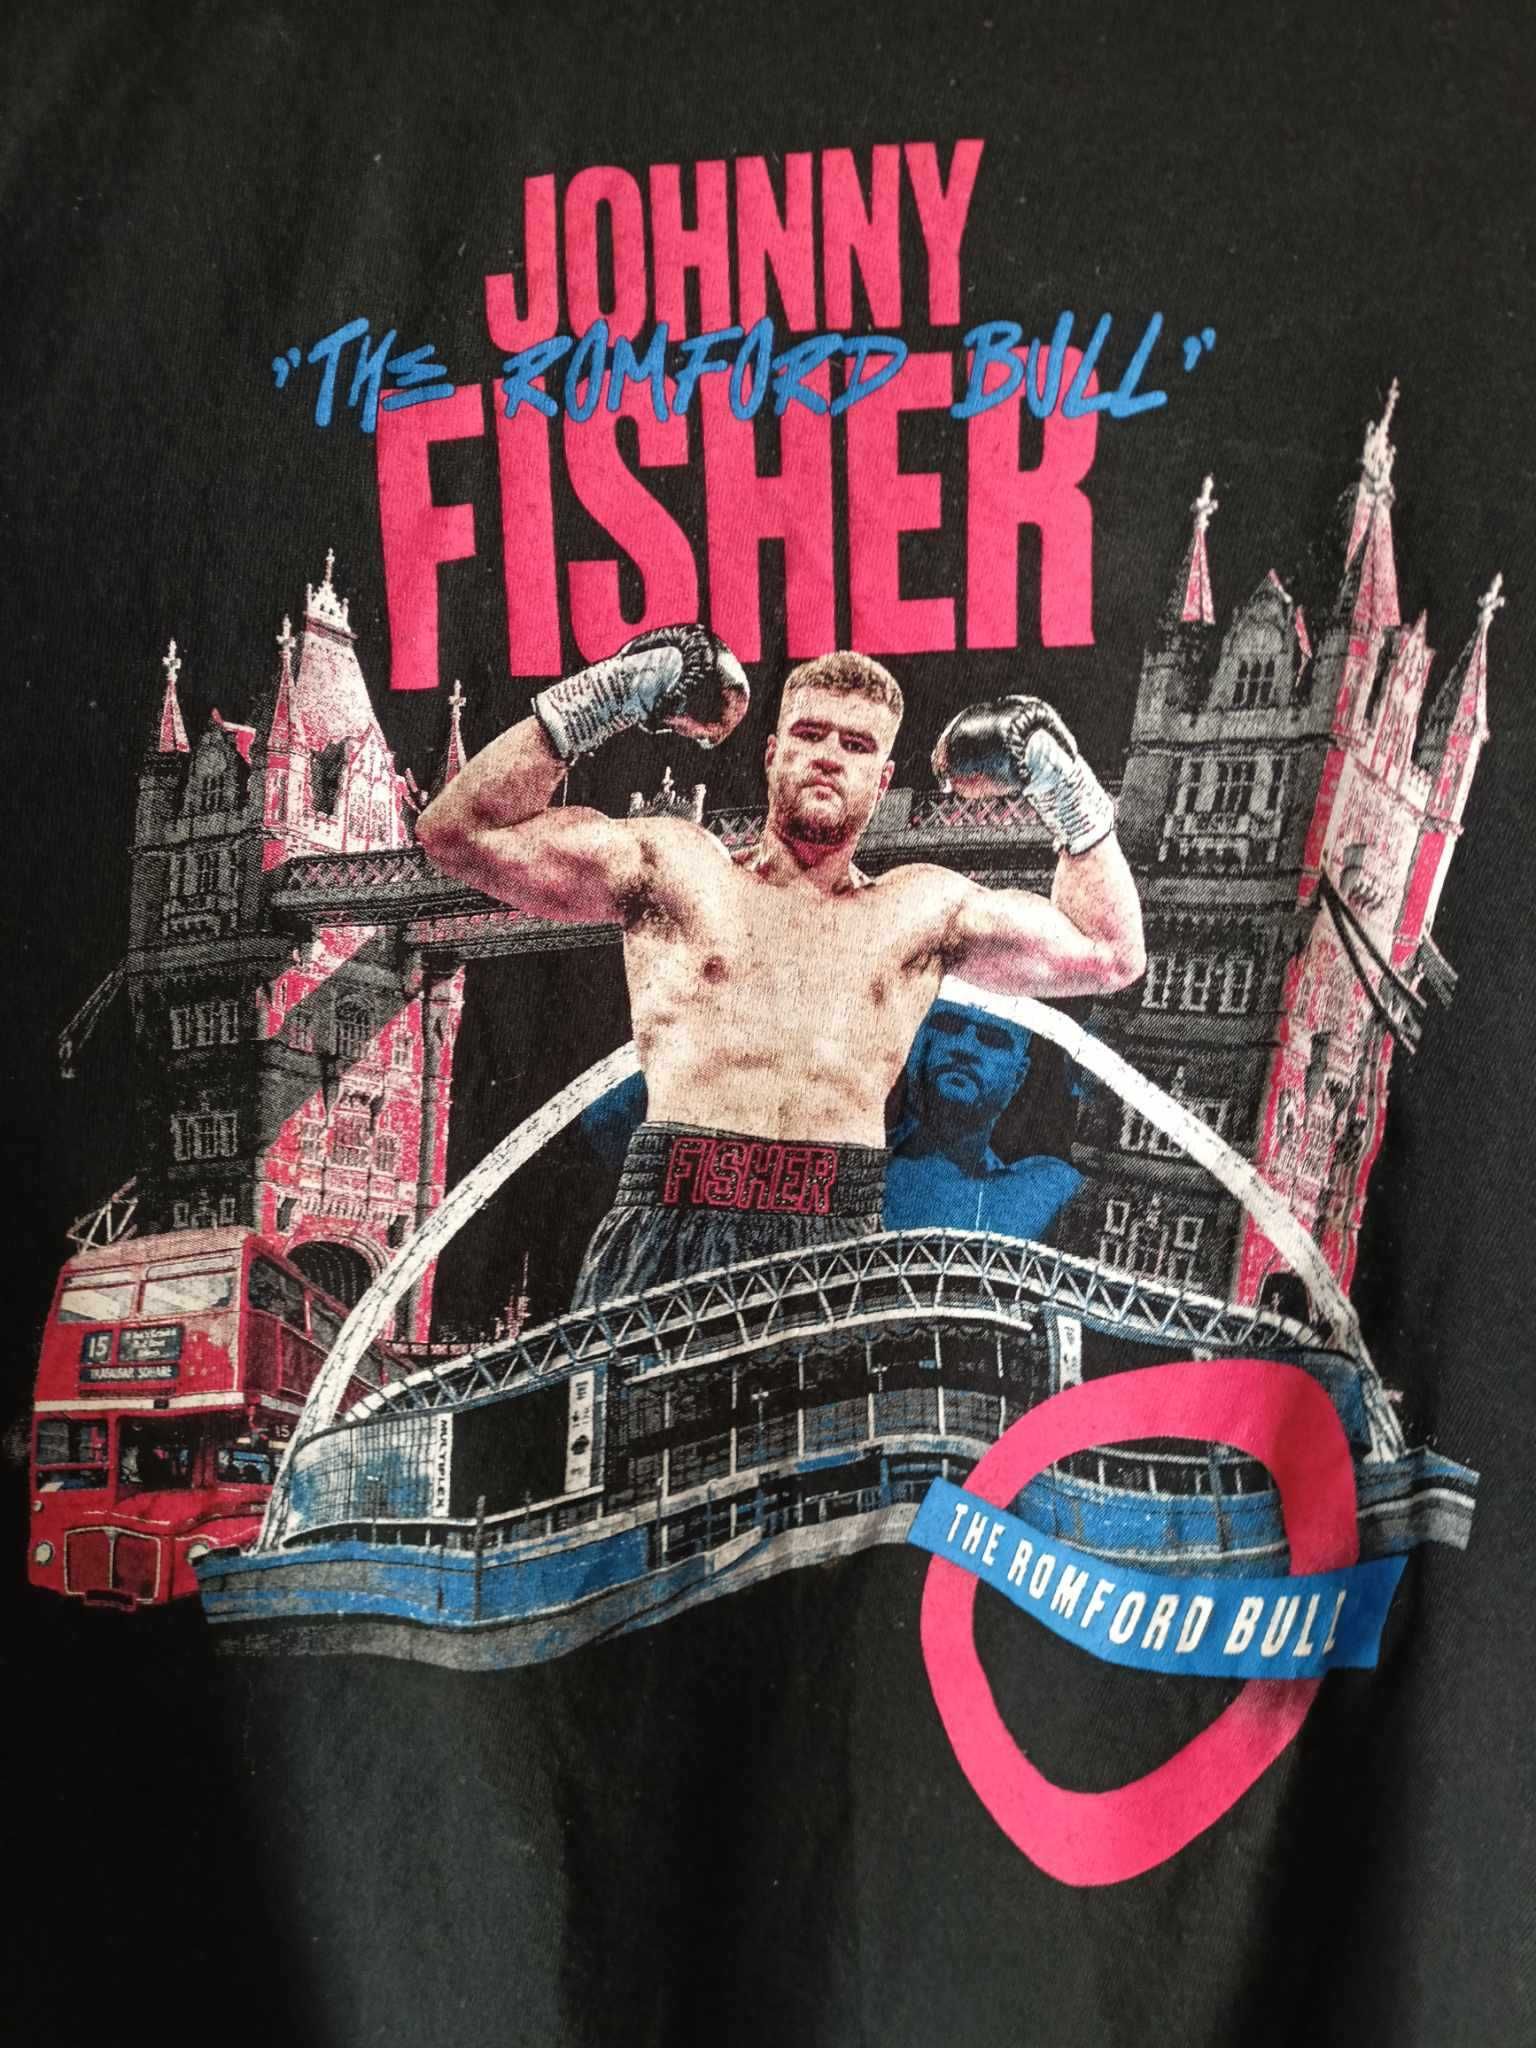 Vintage Johnny Fisher "The Romford Bull" Boxing T-Shirt